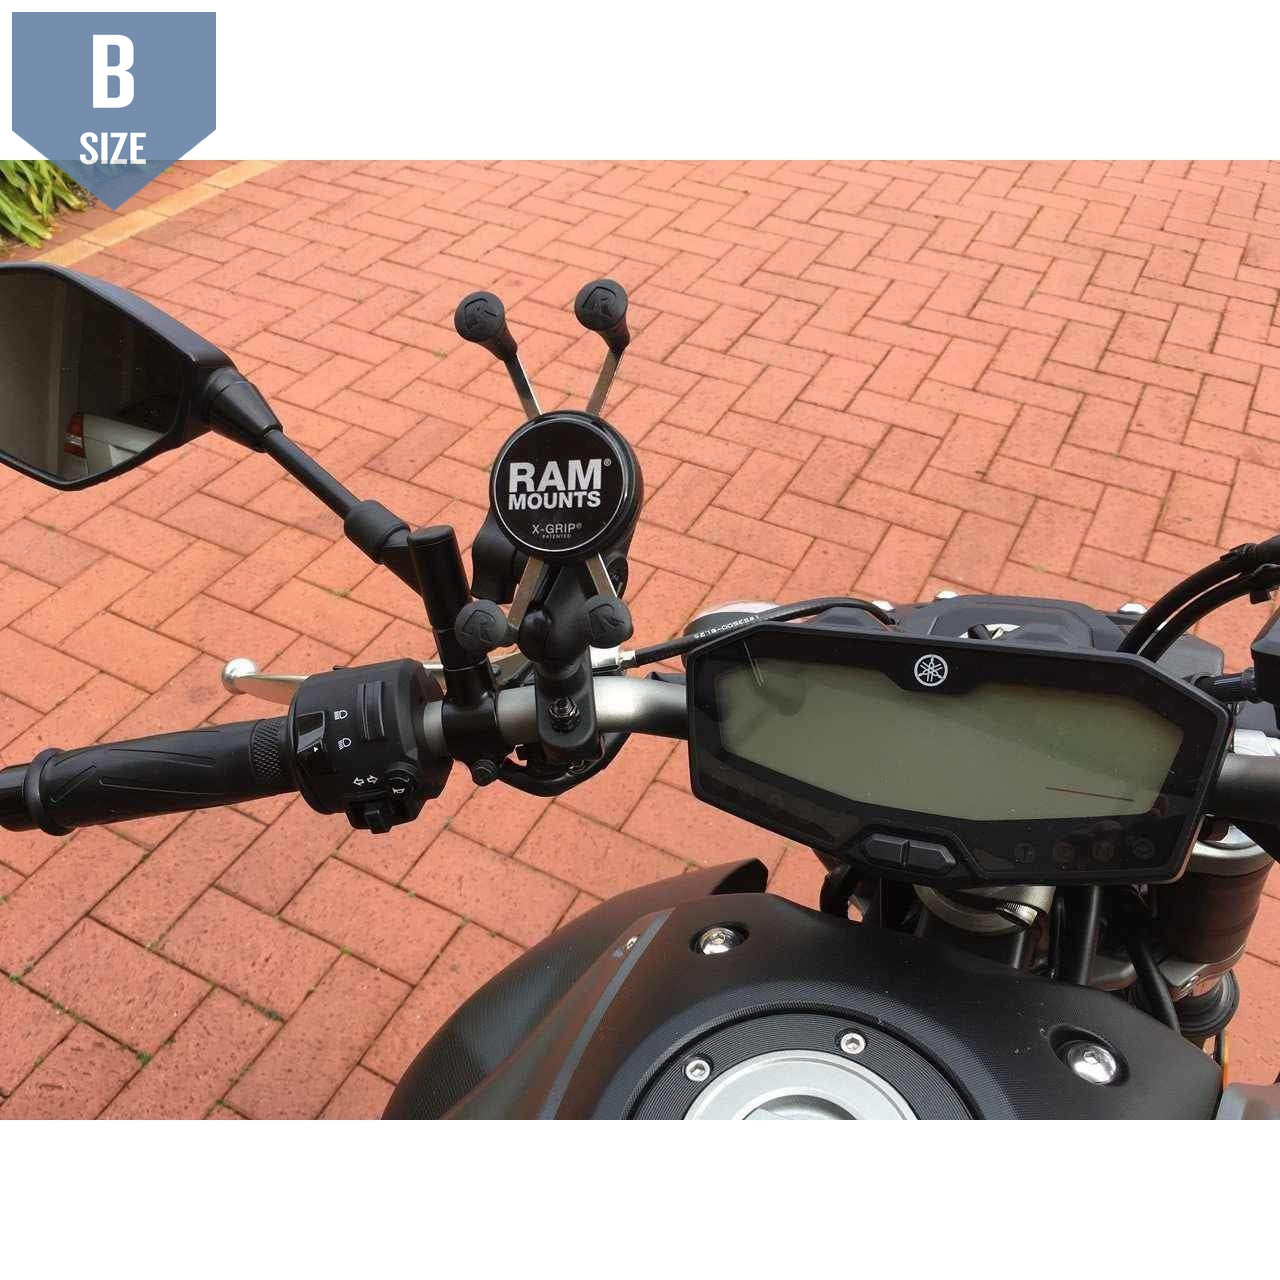 Buy RAM Mount X Grip Motorcycle Online in Australia